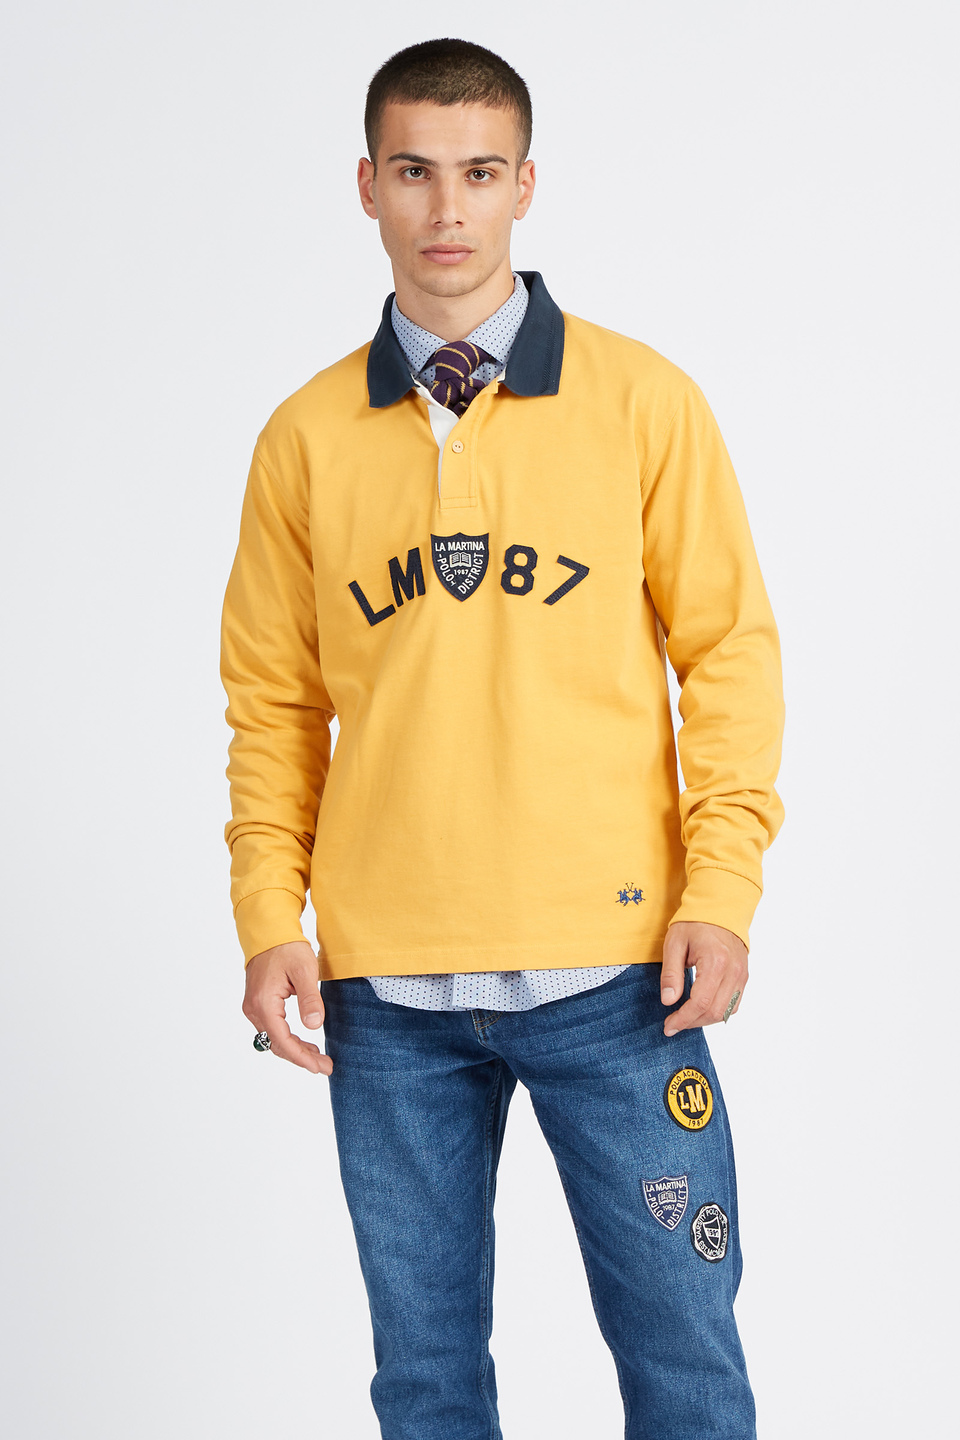 Polo Academy Herren-Langarm-Poloshirt mit kleinem Kontrastkragen-Logo - Vardis | La Martina - Official Online Shop